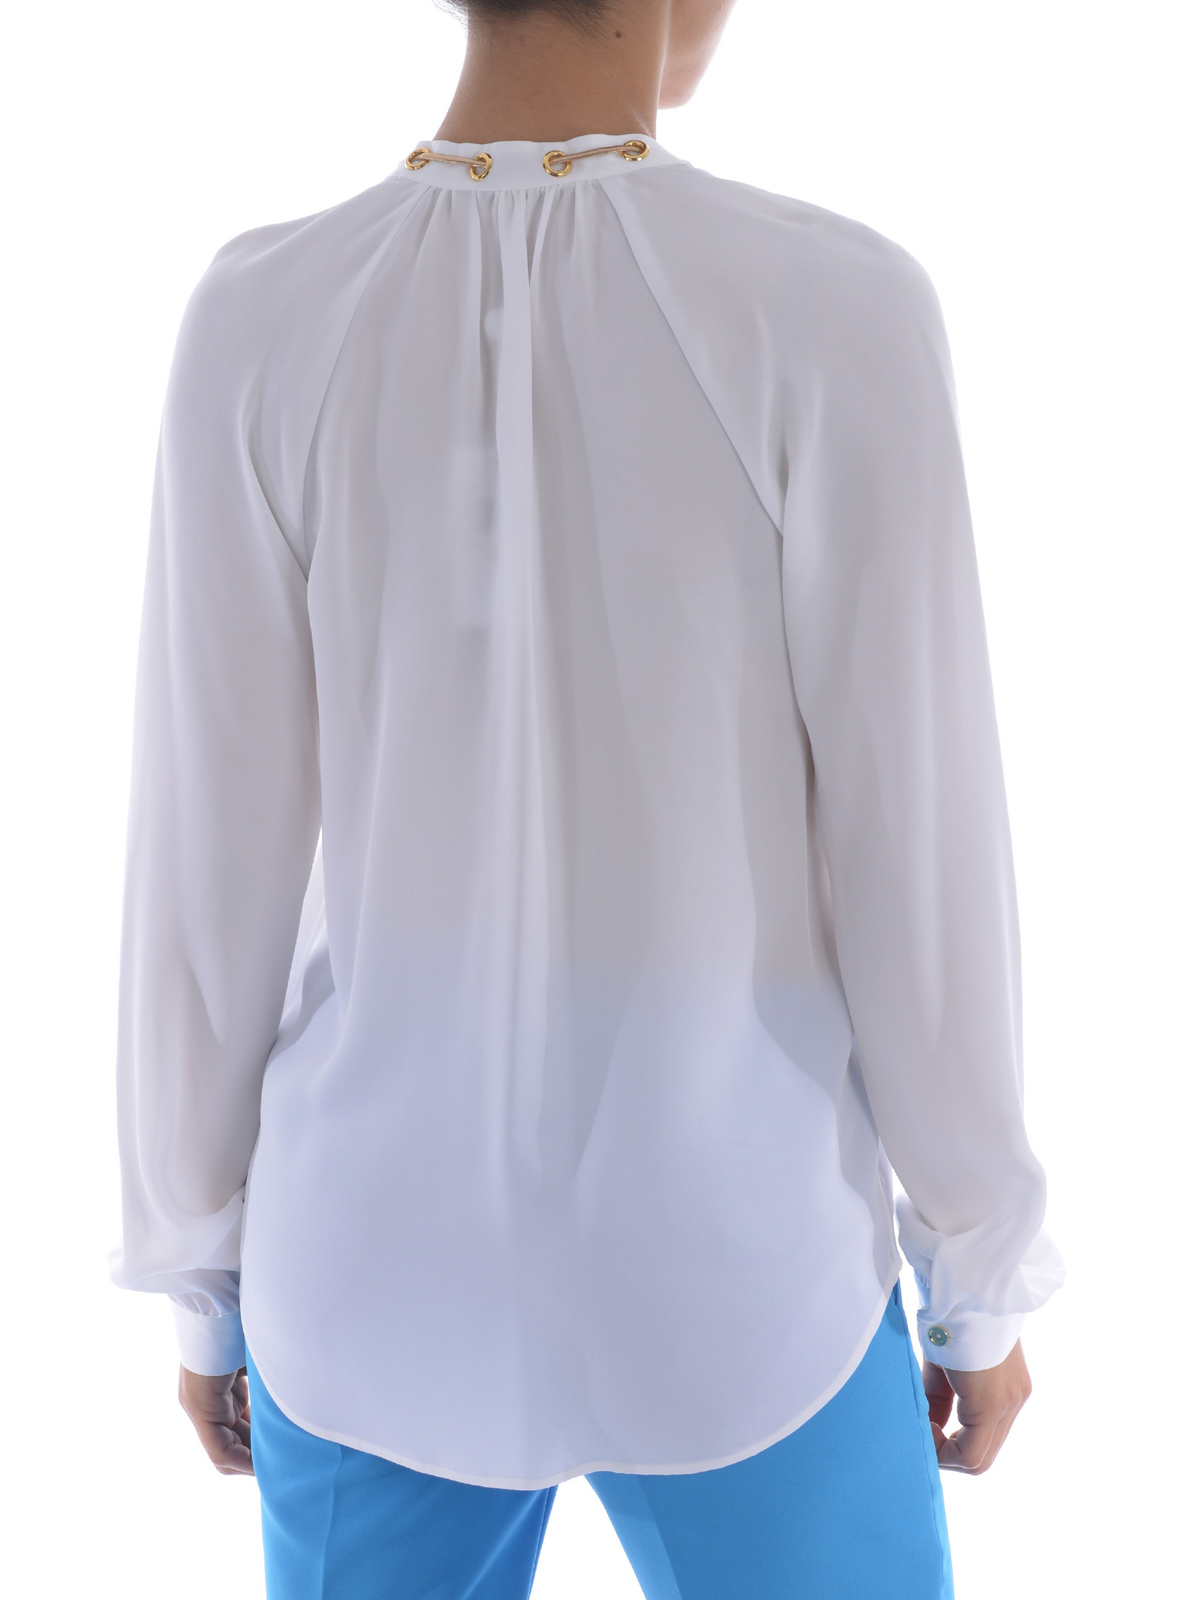 Blouses Michael Kors - Metal chain silk blouse - MS74L67VY0100 